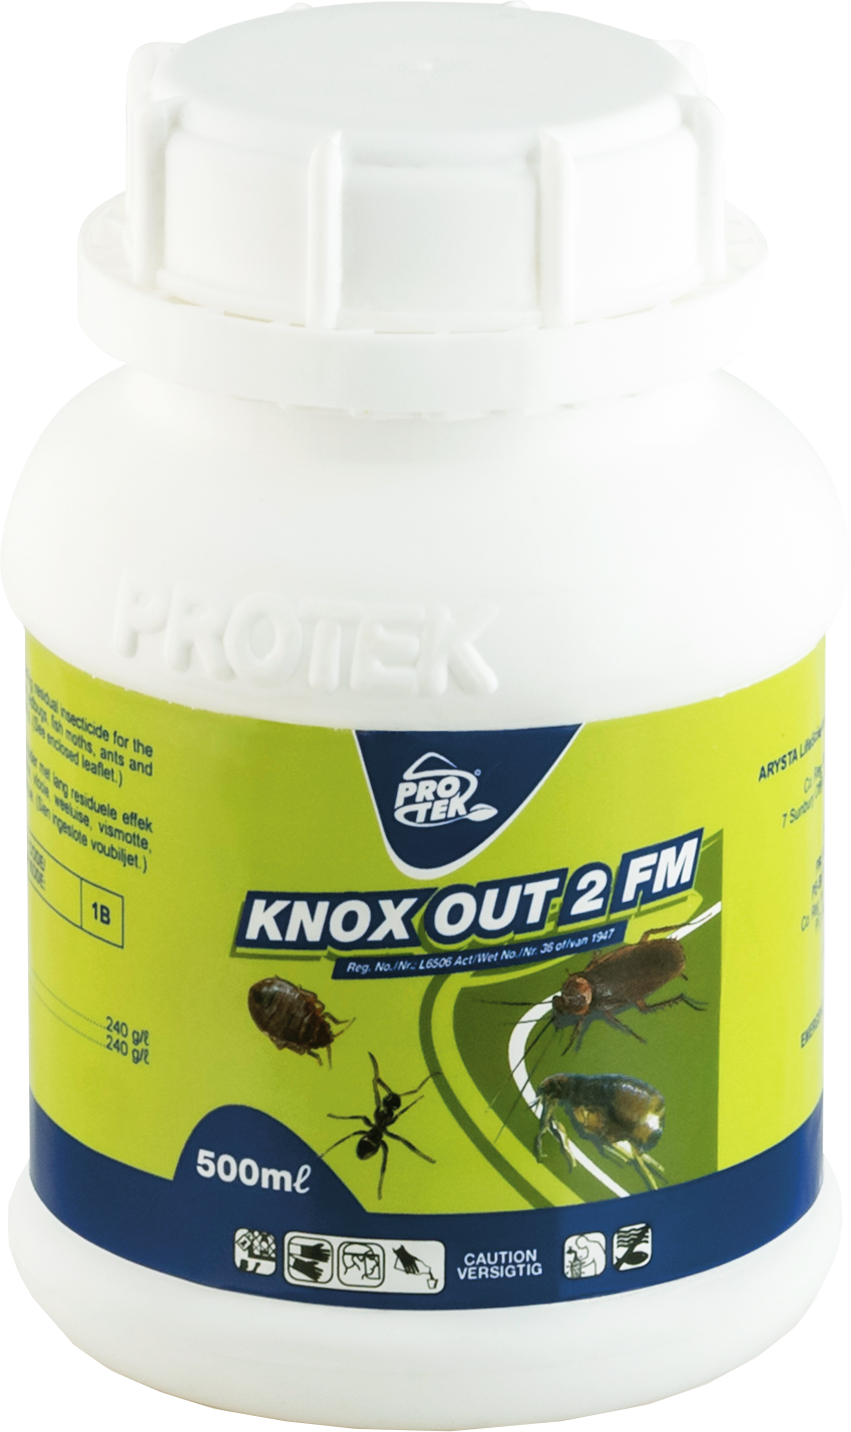 Protek Knox Out 2 FM 500ml